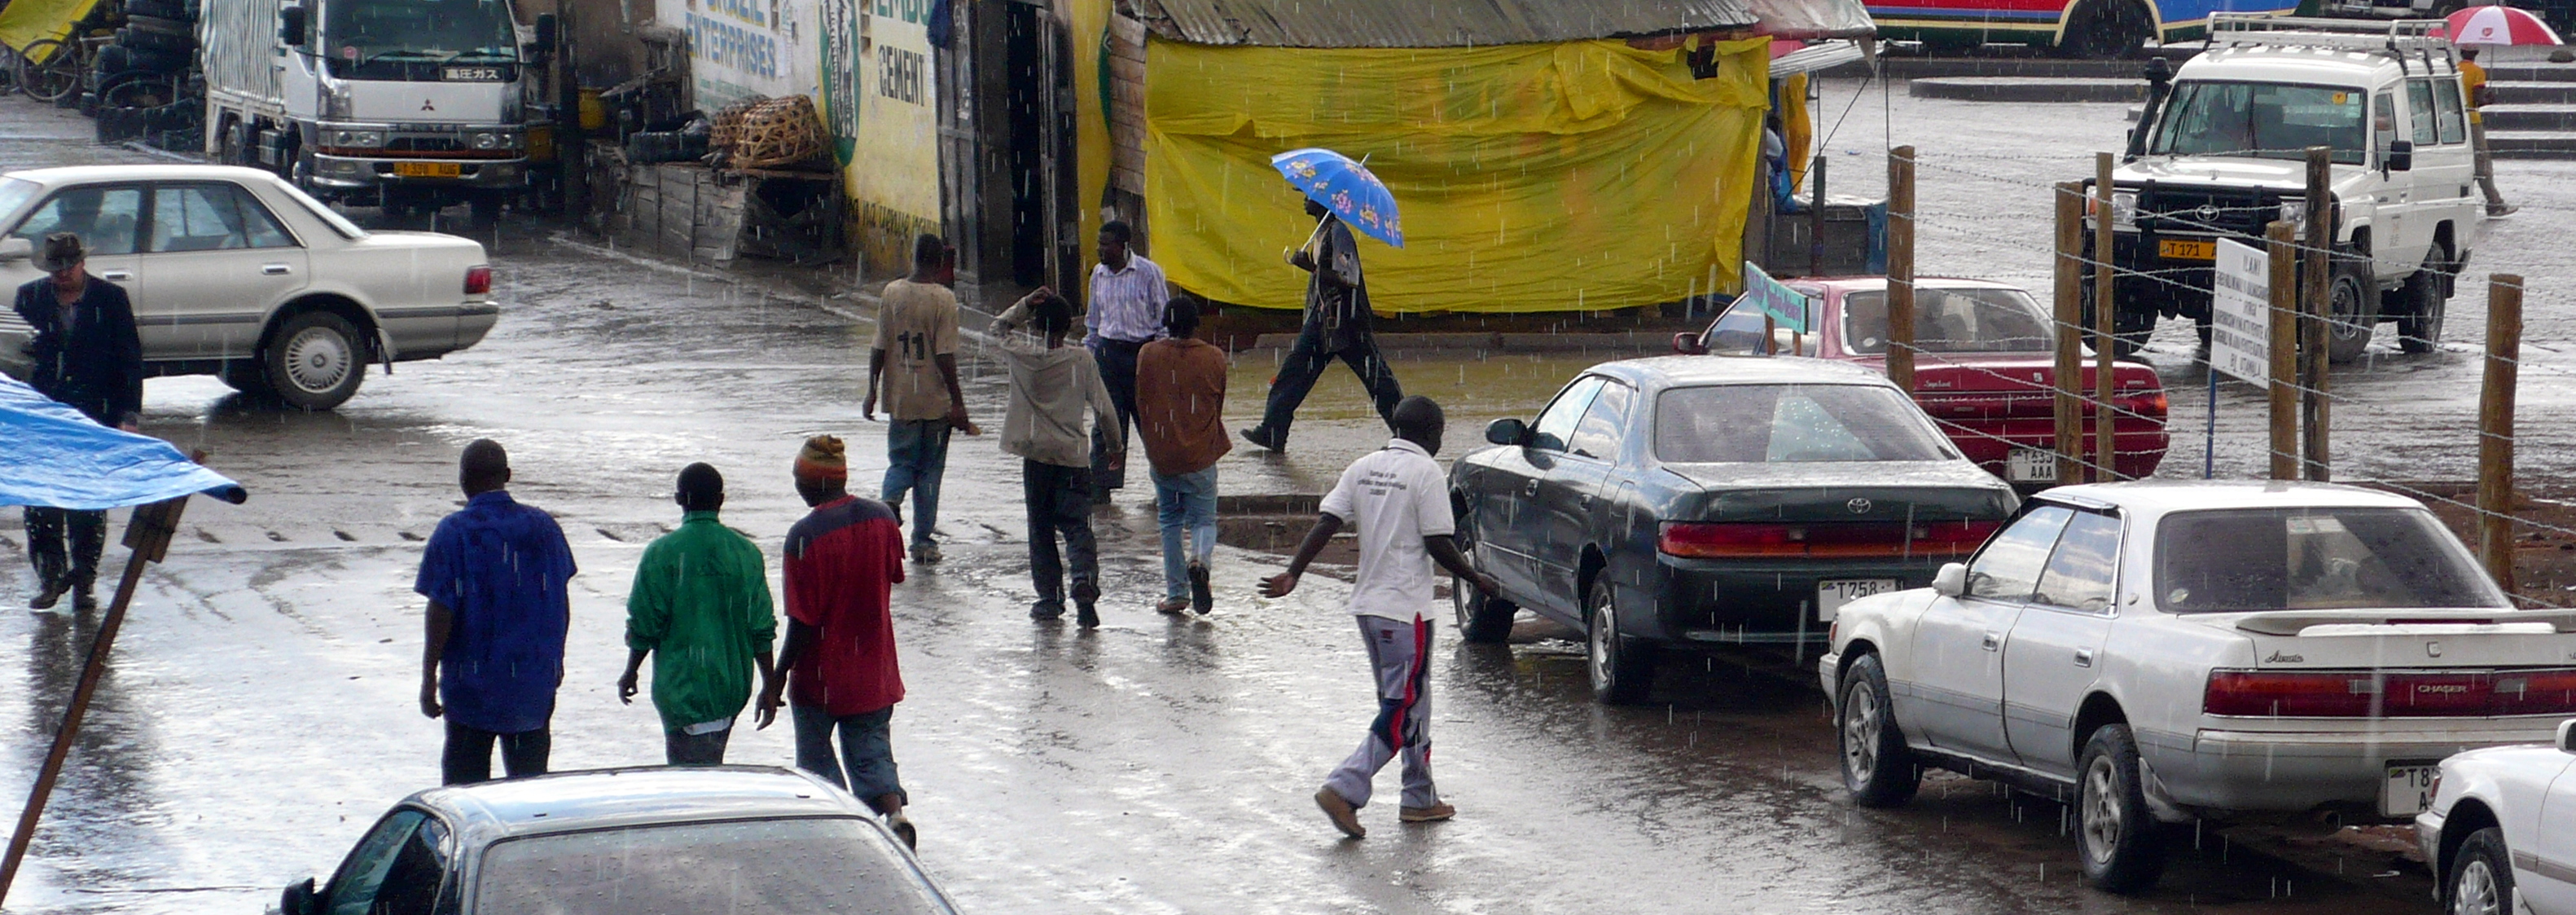 Downtown Iringa - Rain season